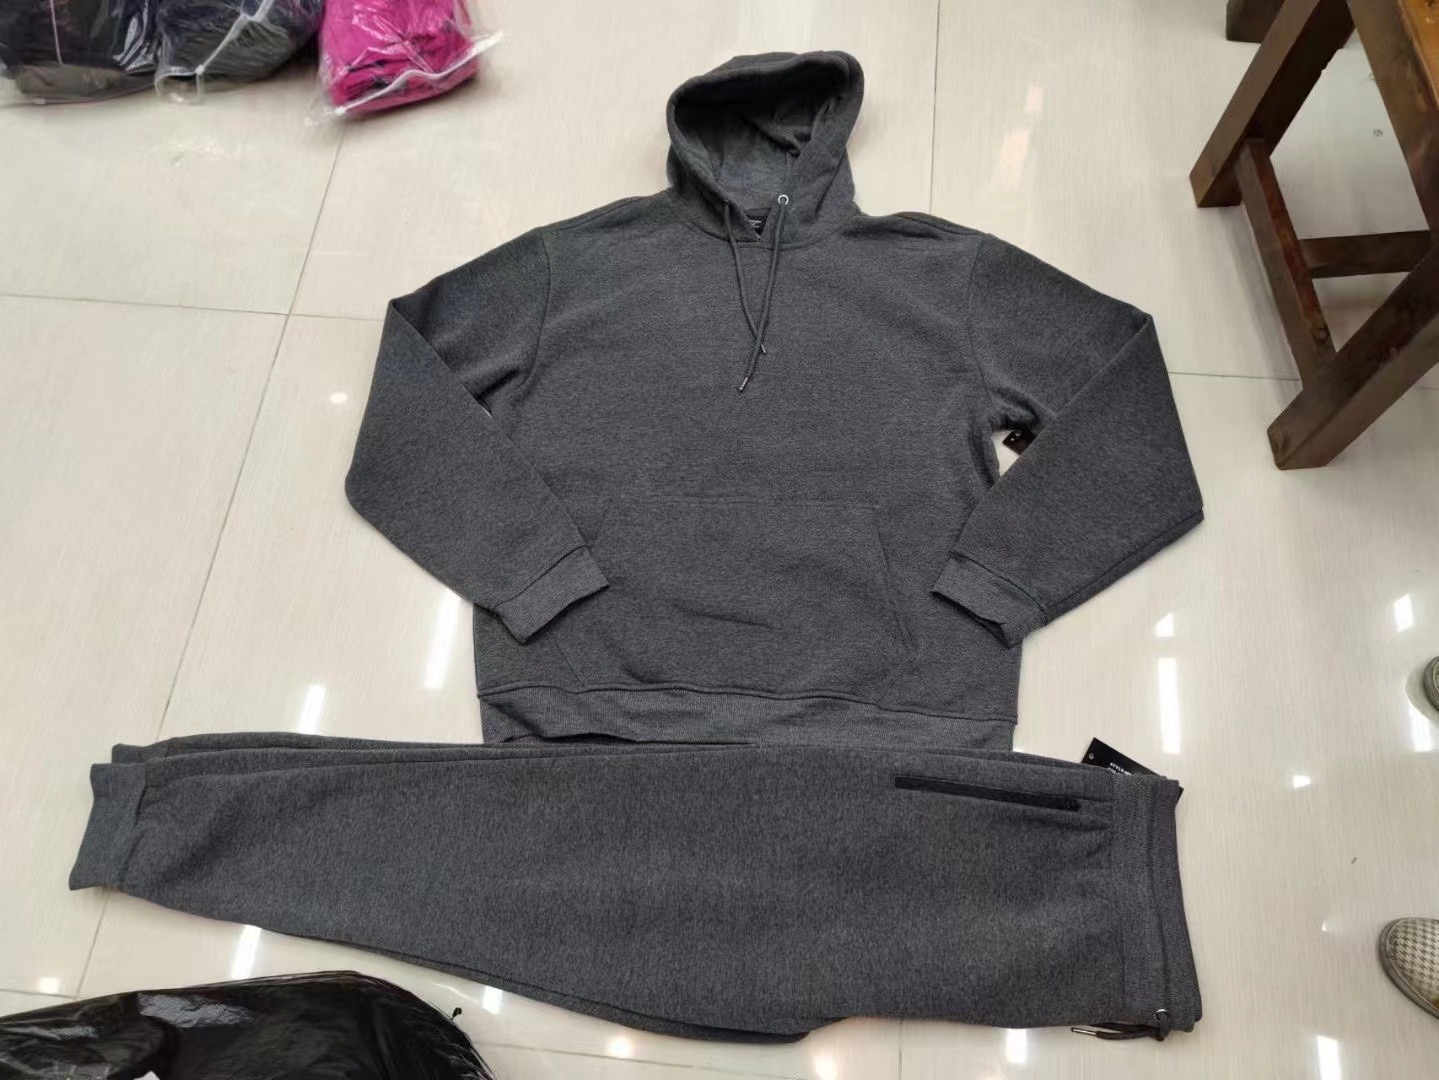 50942 - Men's hoodie suit China